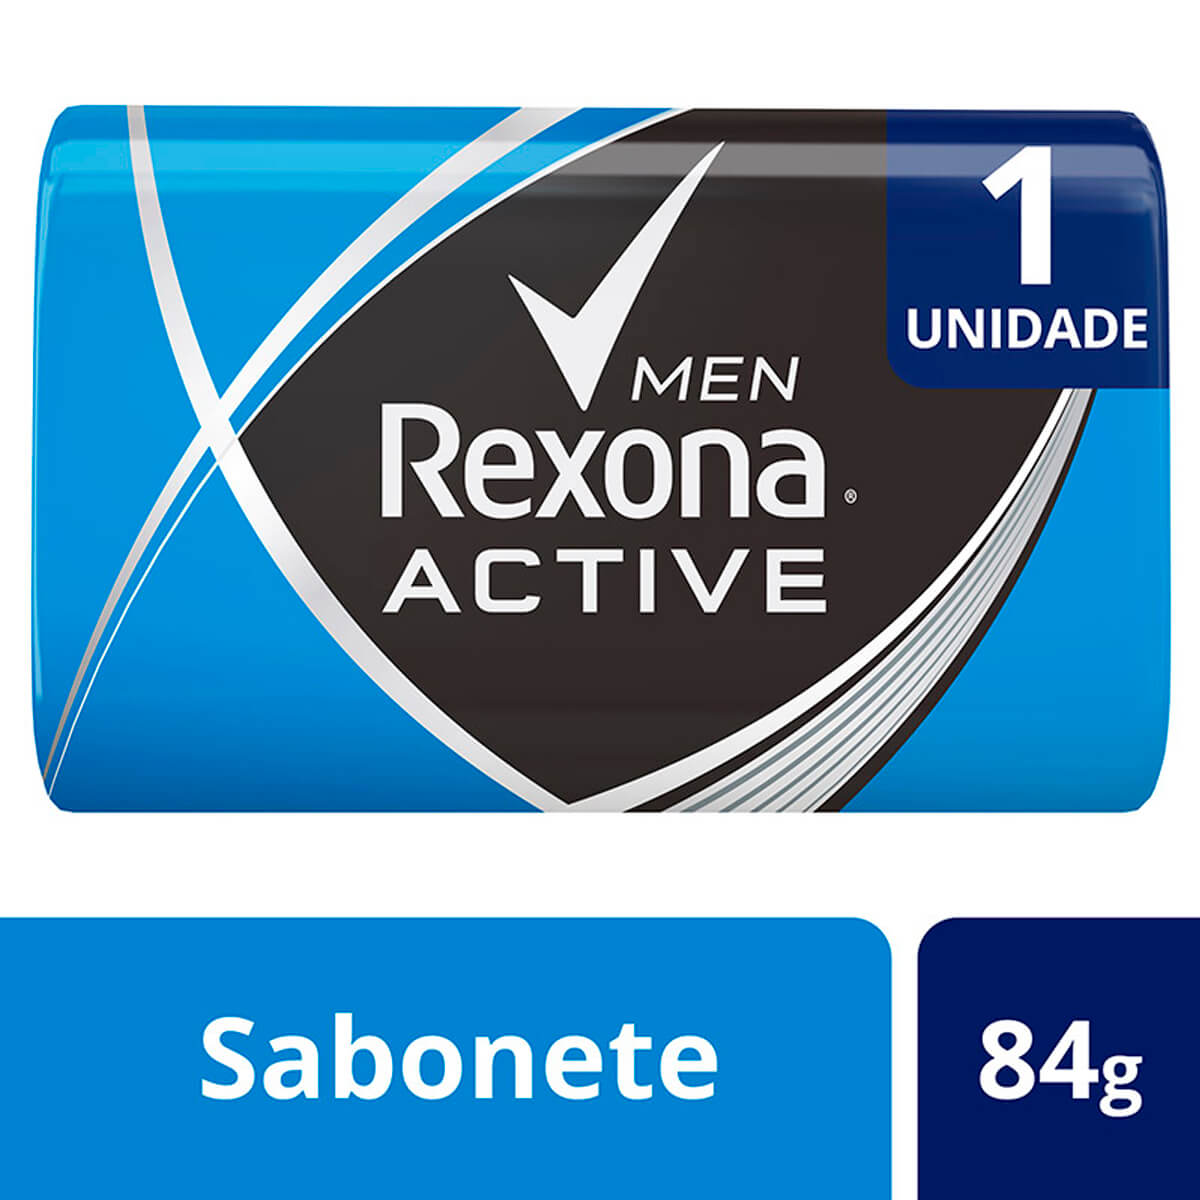 Sabonete Rexona Men Active 84g